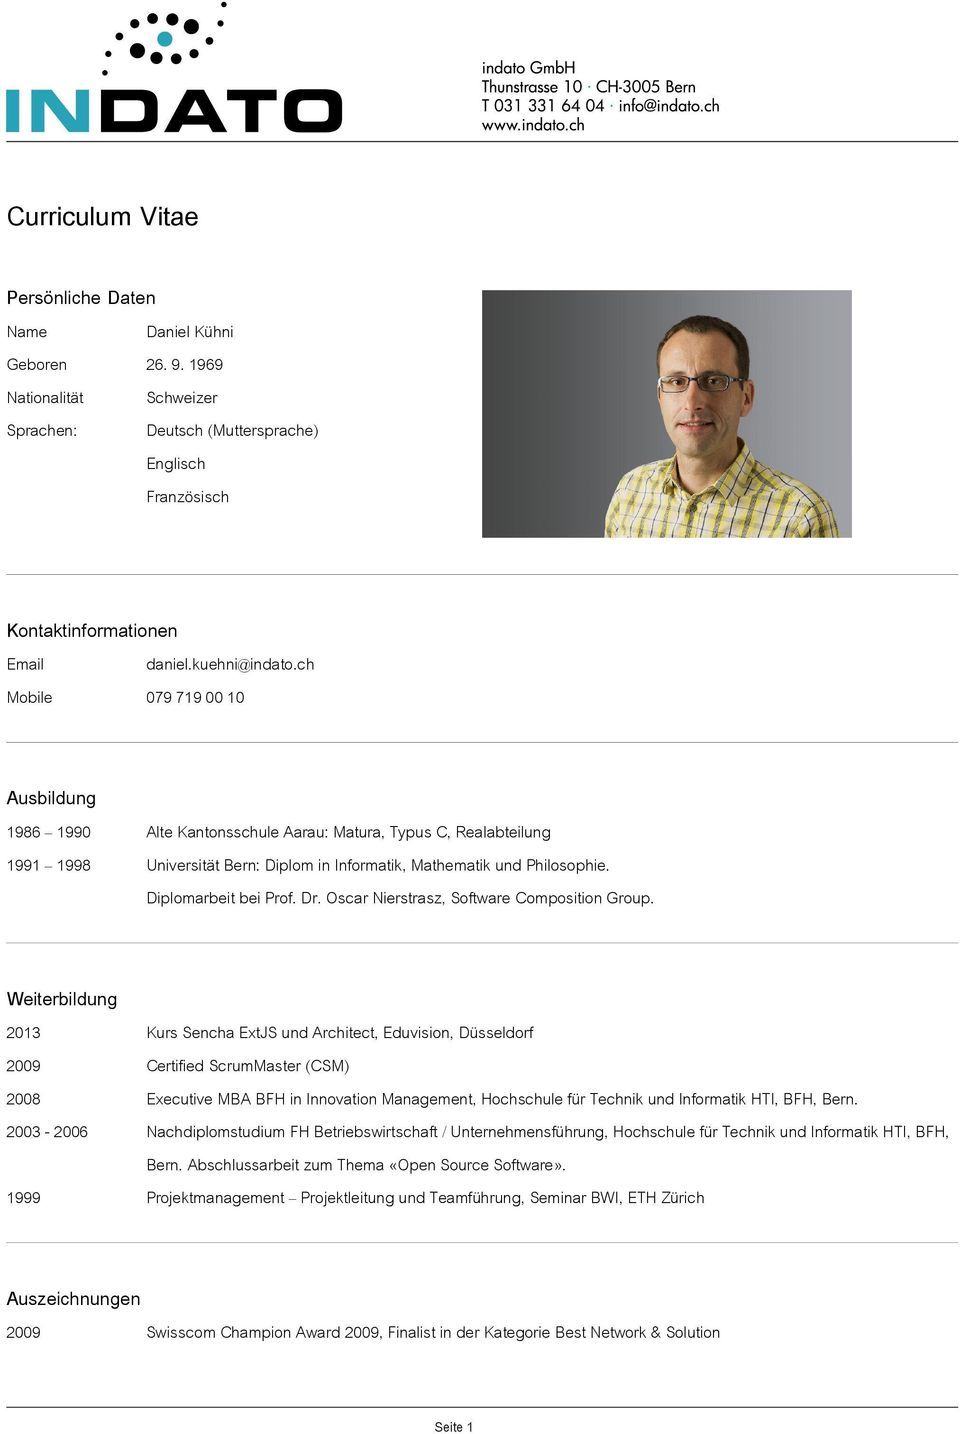 Diplomarbeit bei Prof. Dr. Oscar Nierstrasz, Software Composition Group.